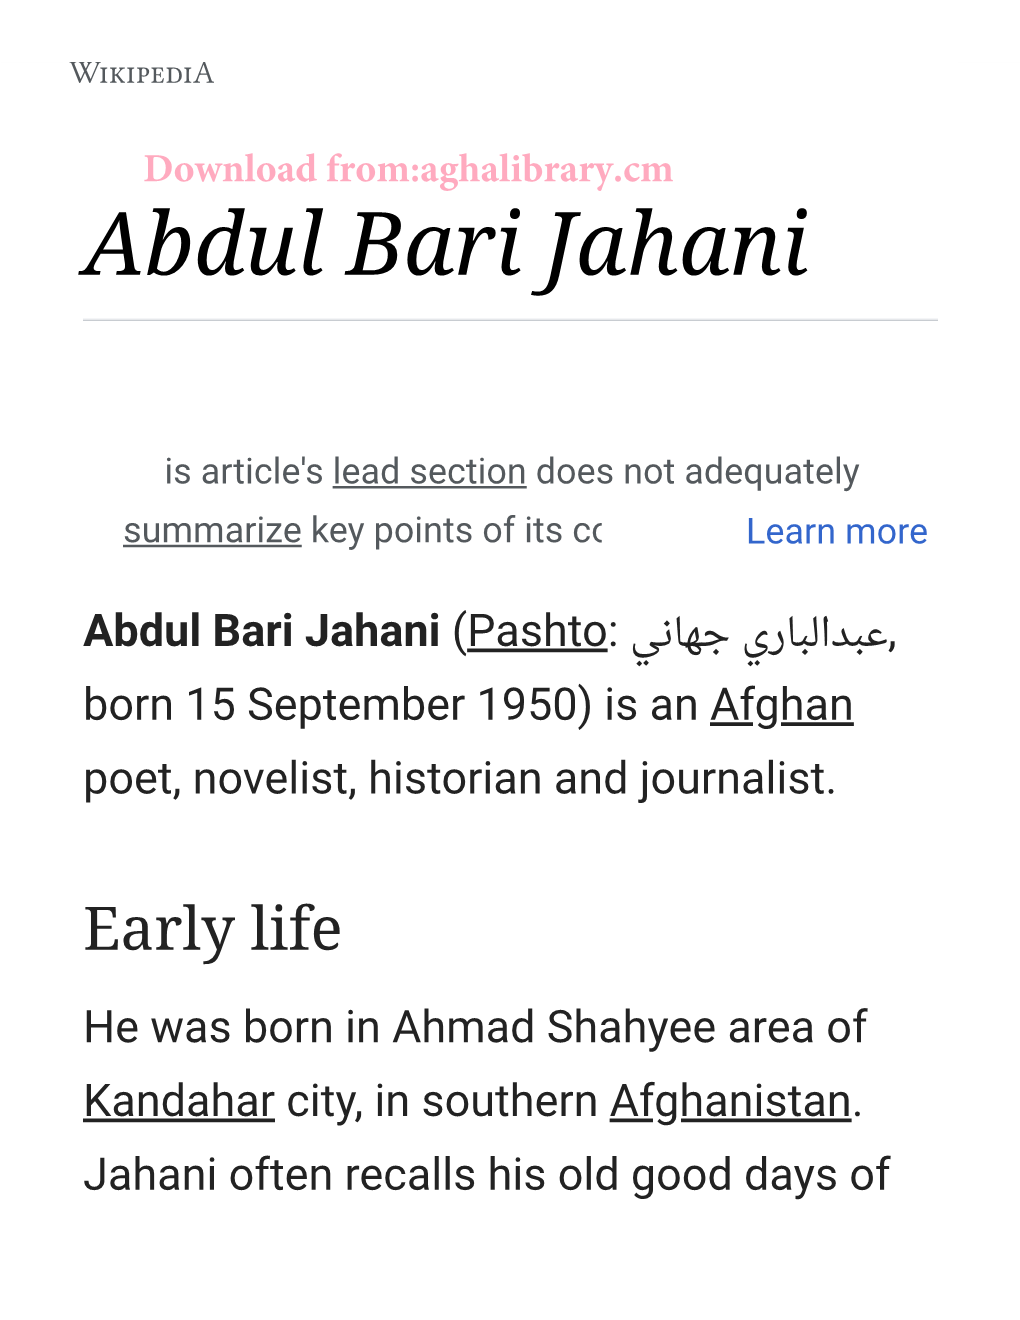 Abdul Bari Jahani